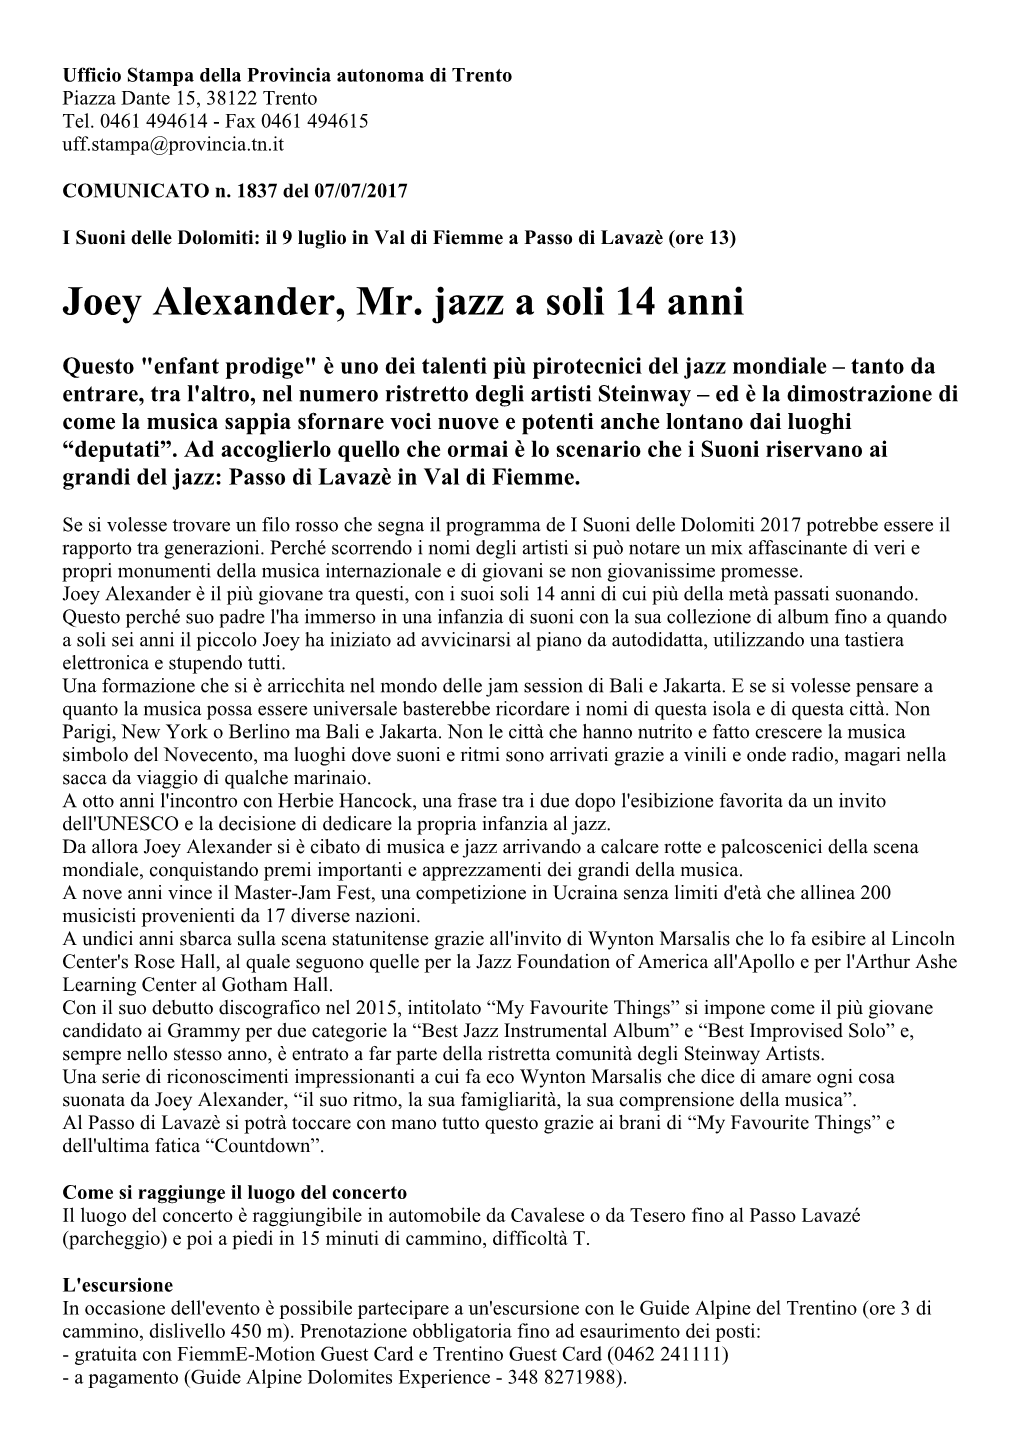 Joey Alexander, Mr. Jazz a Soli 14 Anni